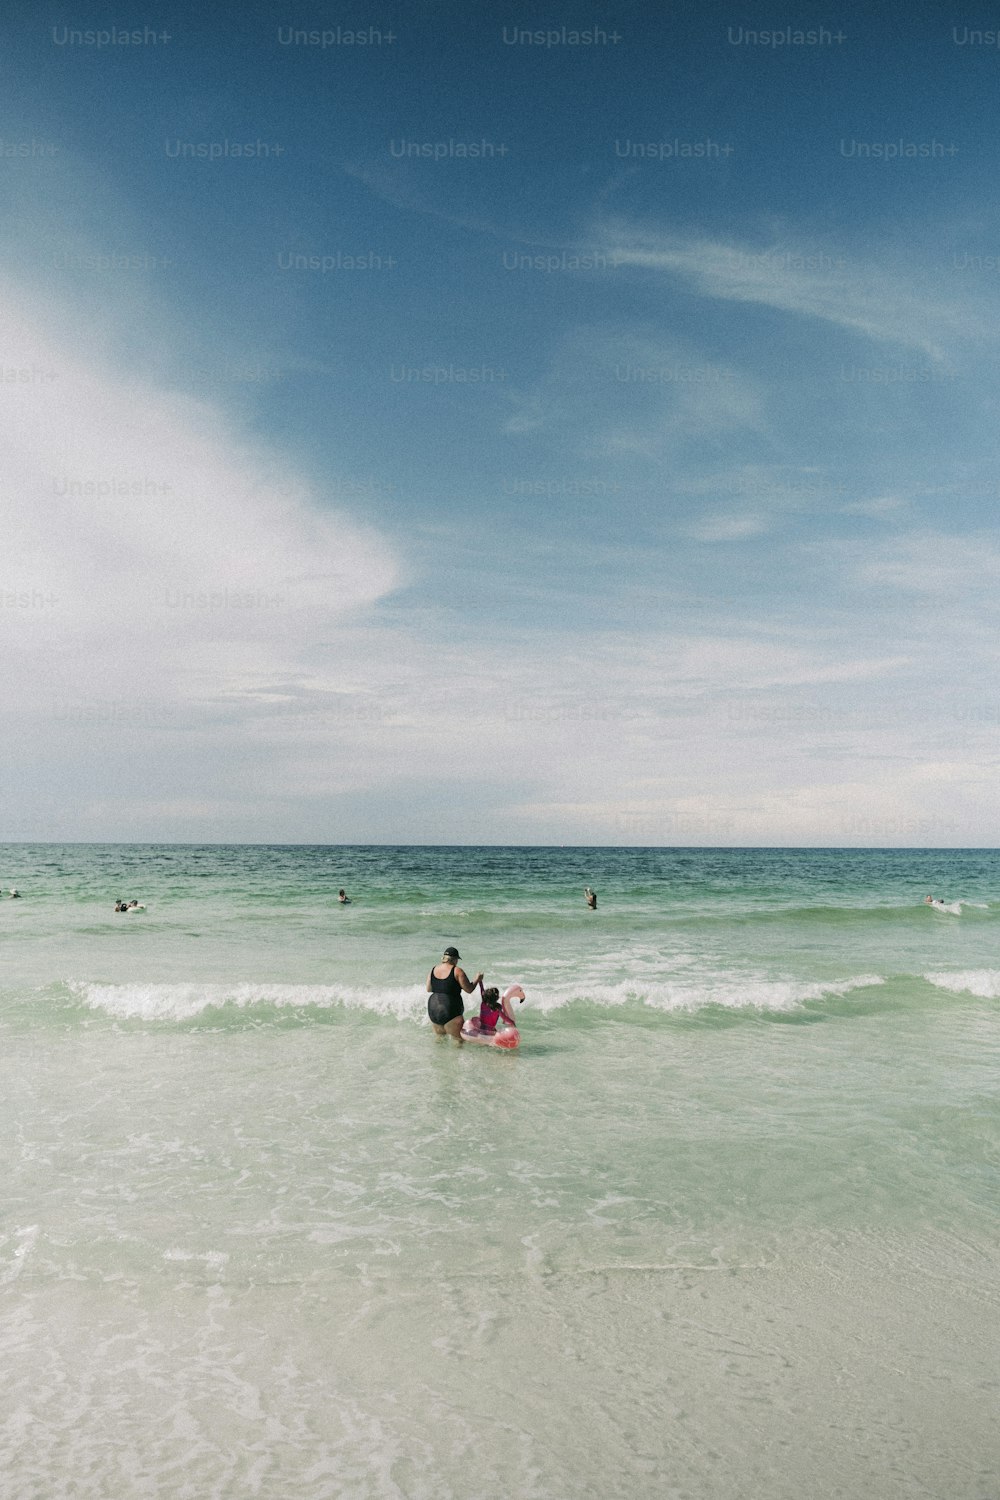 People on beach during daytime photo – Free Brasil Image on Unsplash